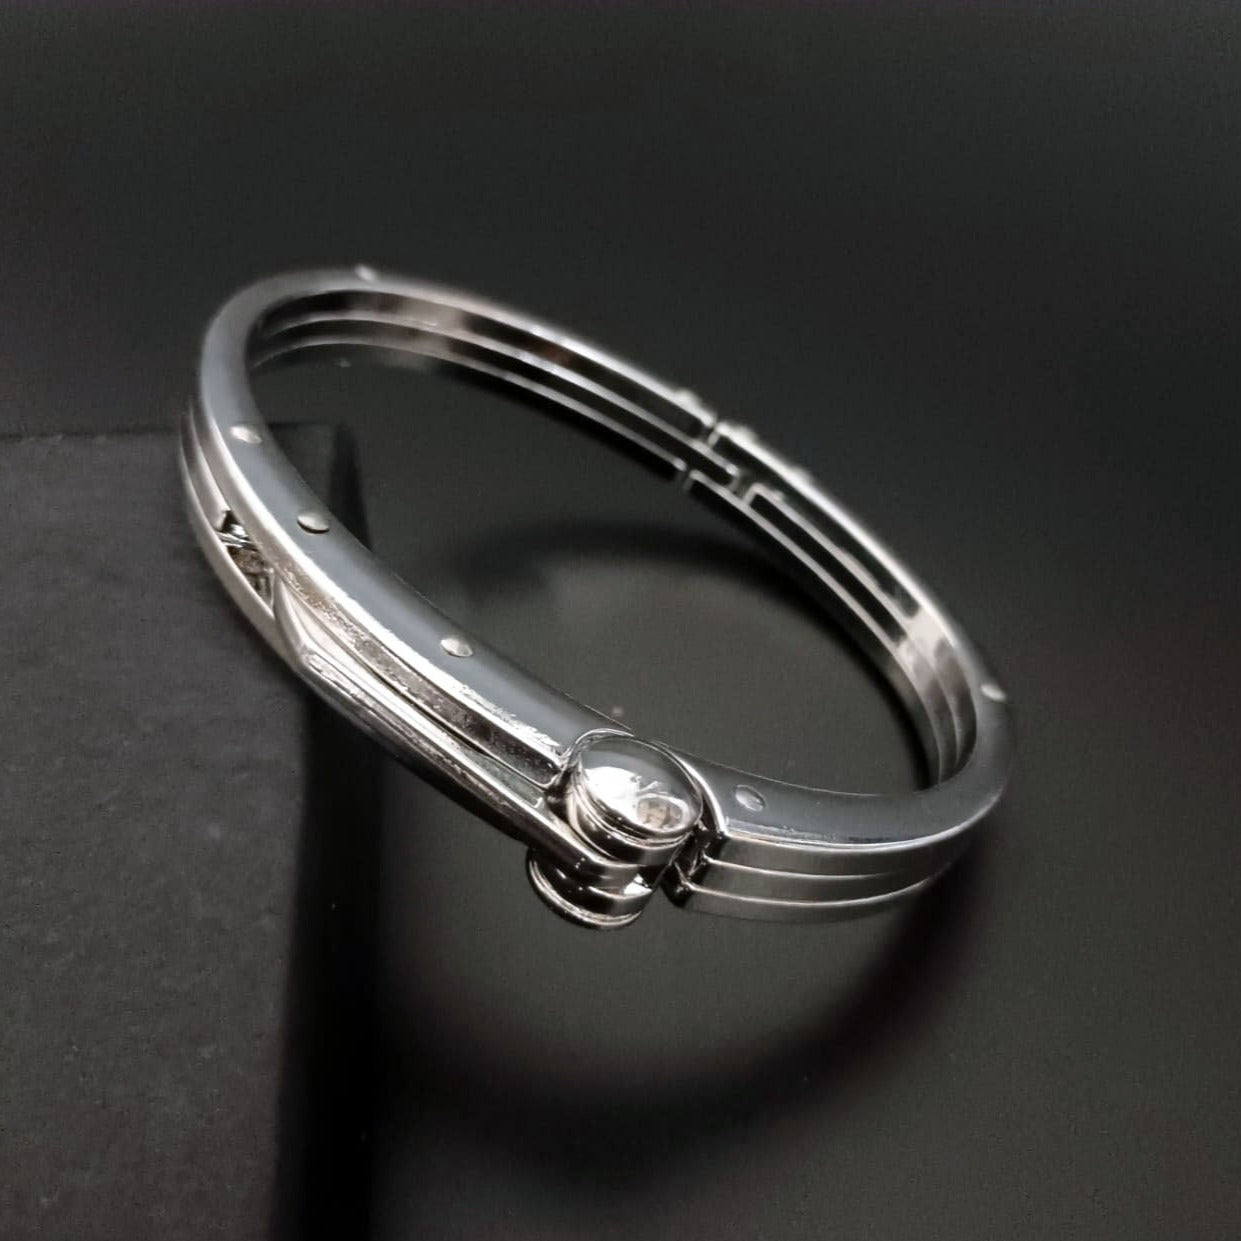 New Silver Handcuff Bracelet For Men